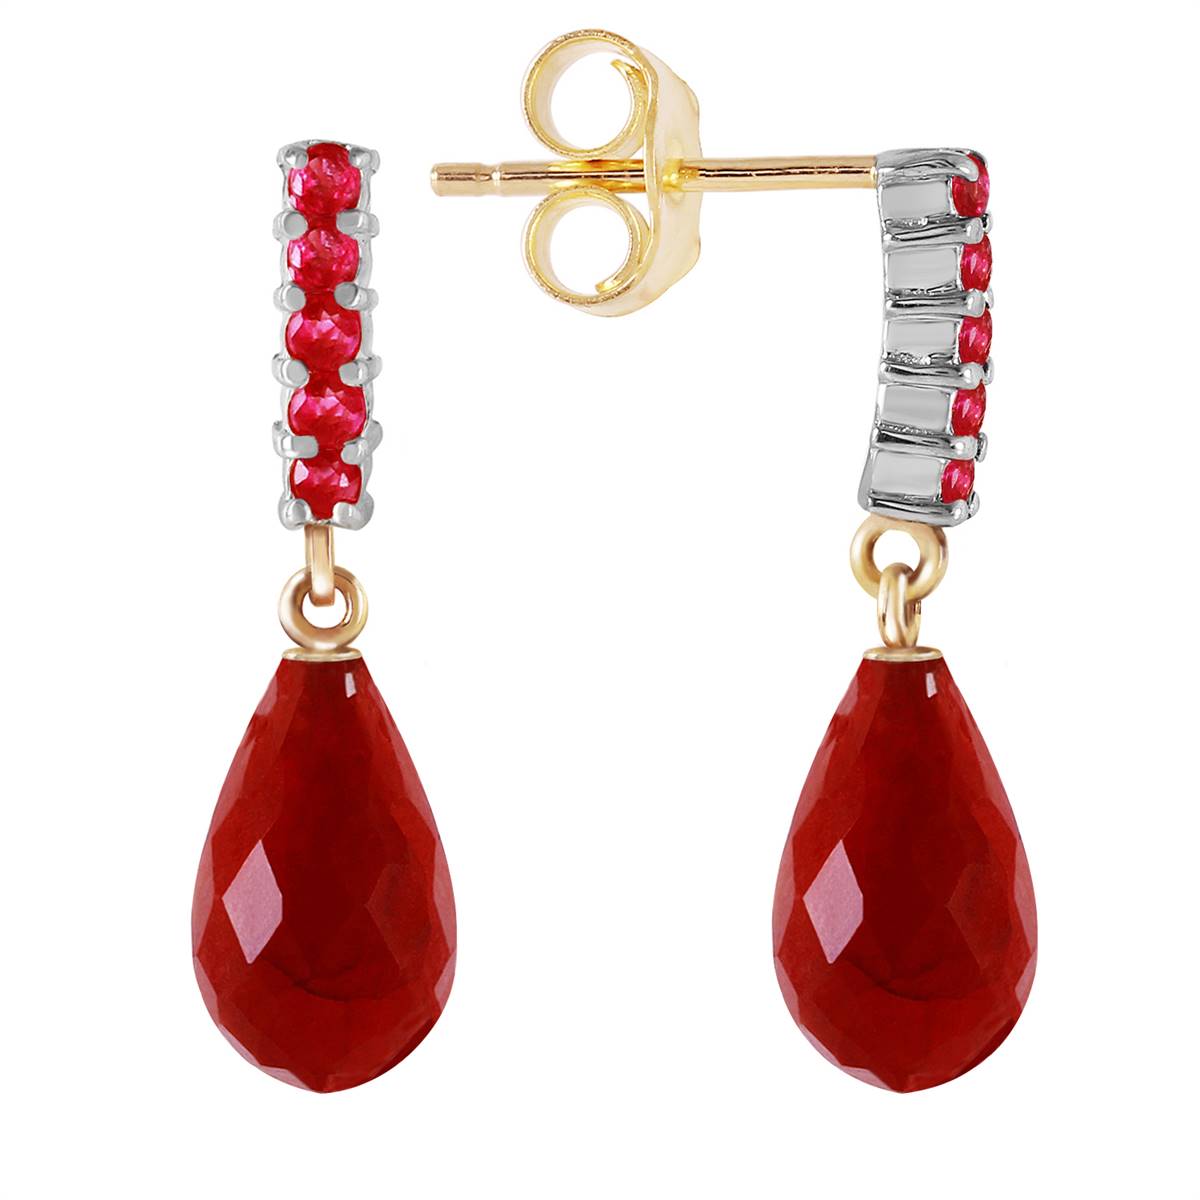 7 Carat 14K Solid Yellow Gold Ruby Earrings Briolette Dangling Ruby